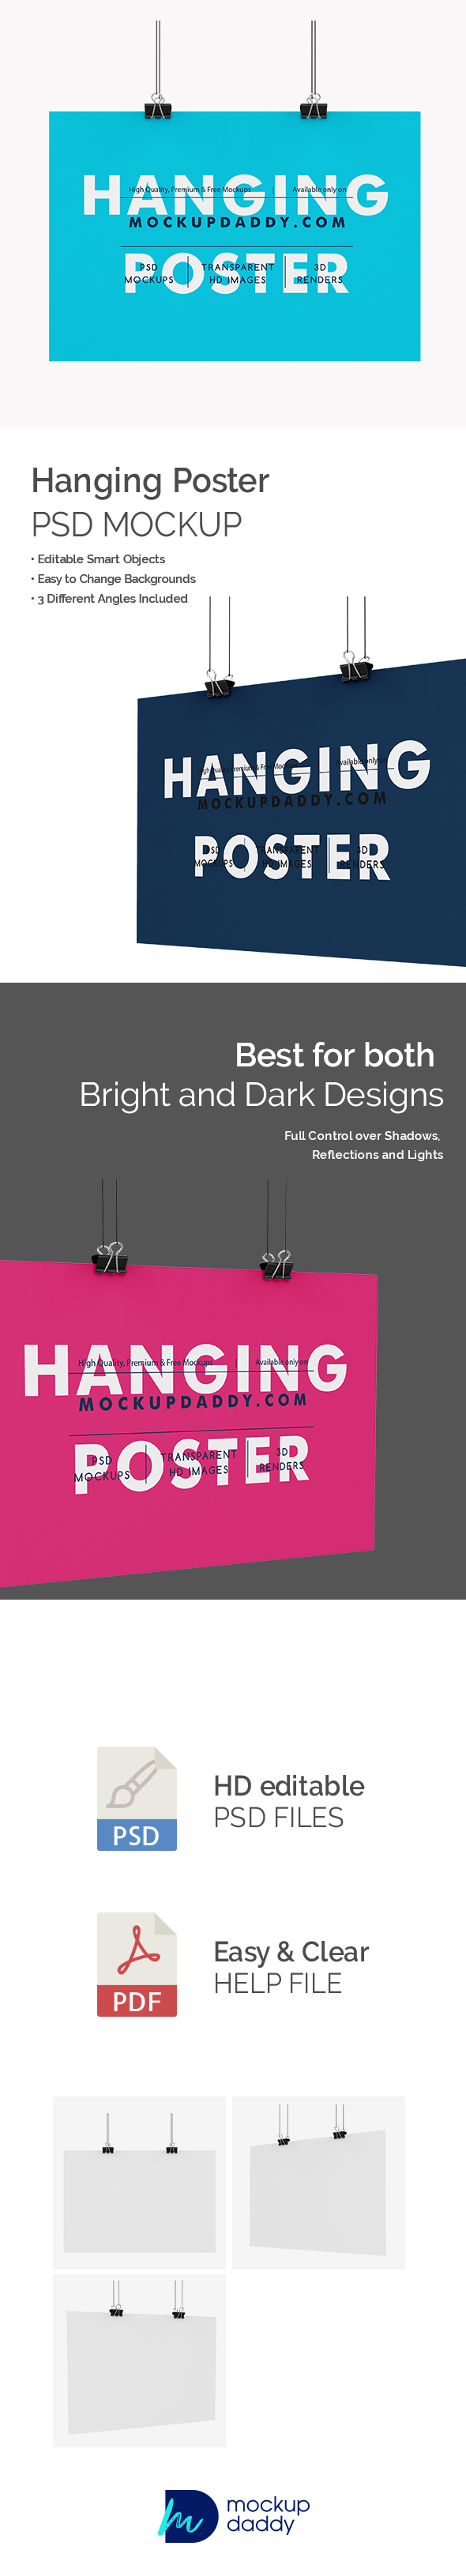 Hanging Poster Mockup